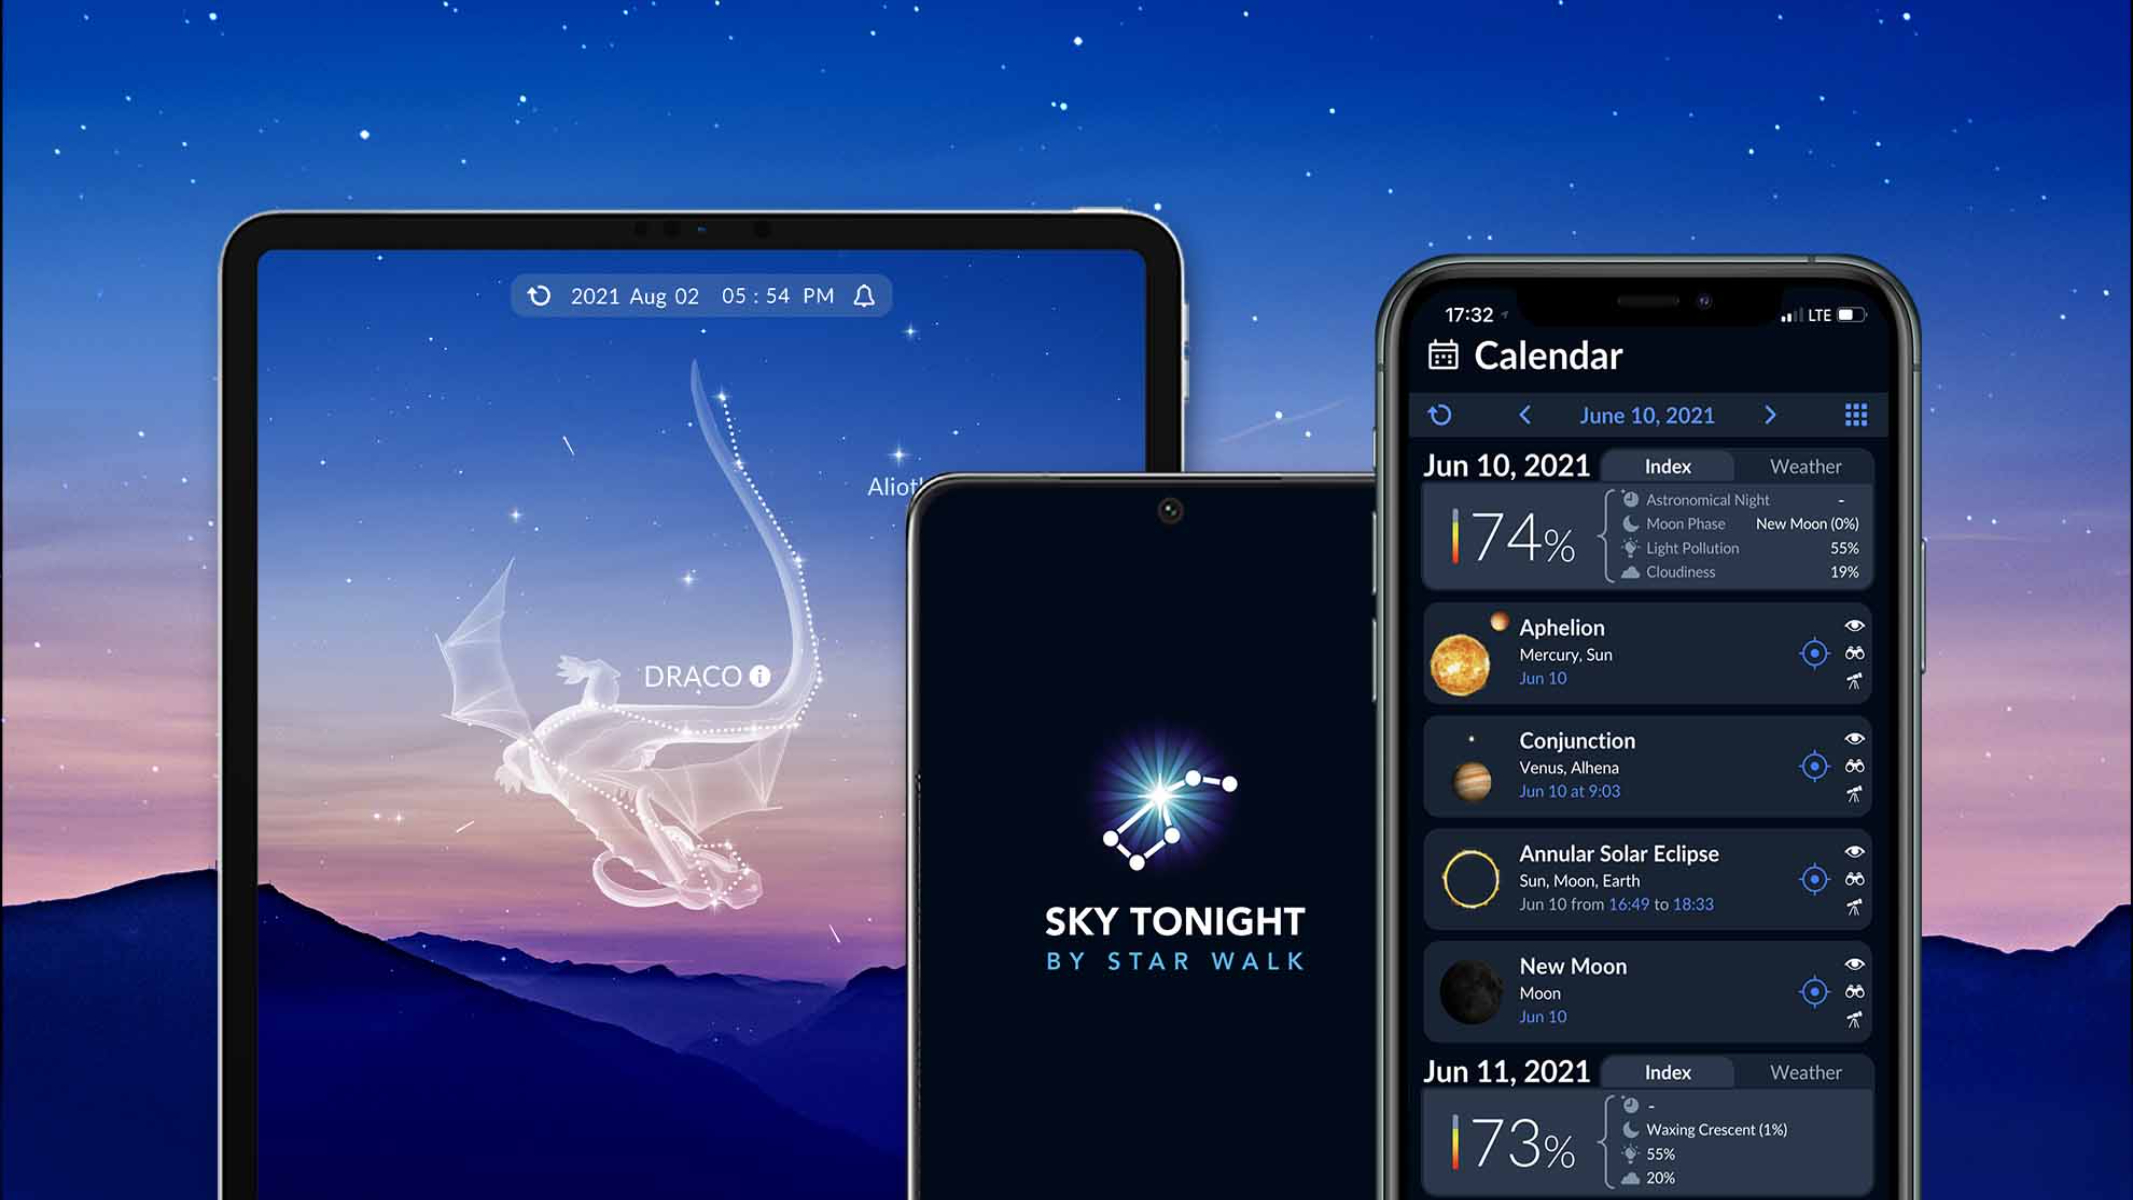  Sky Tonight Star Gazer Guide stargazing app review 